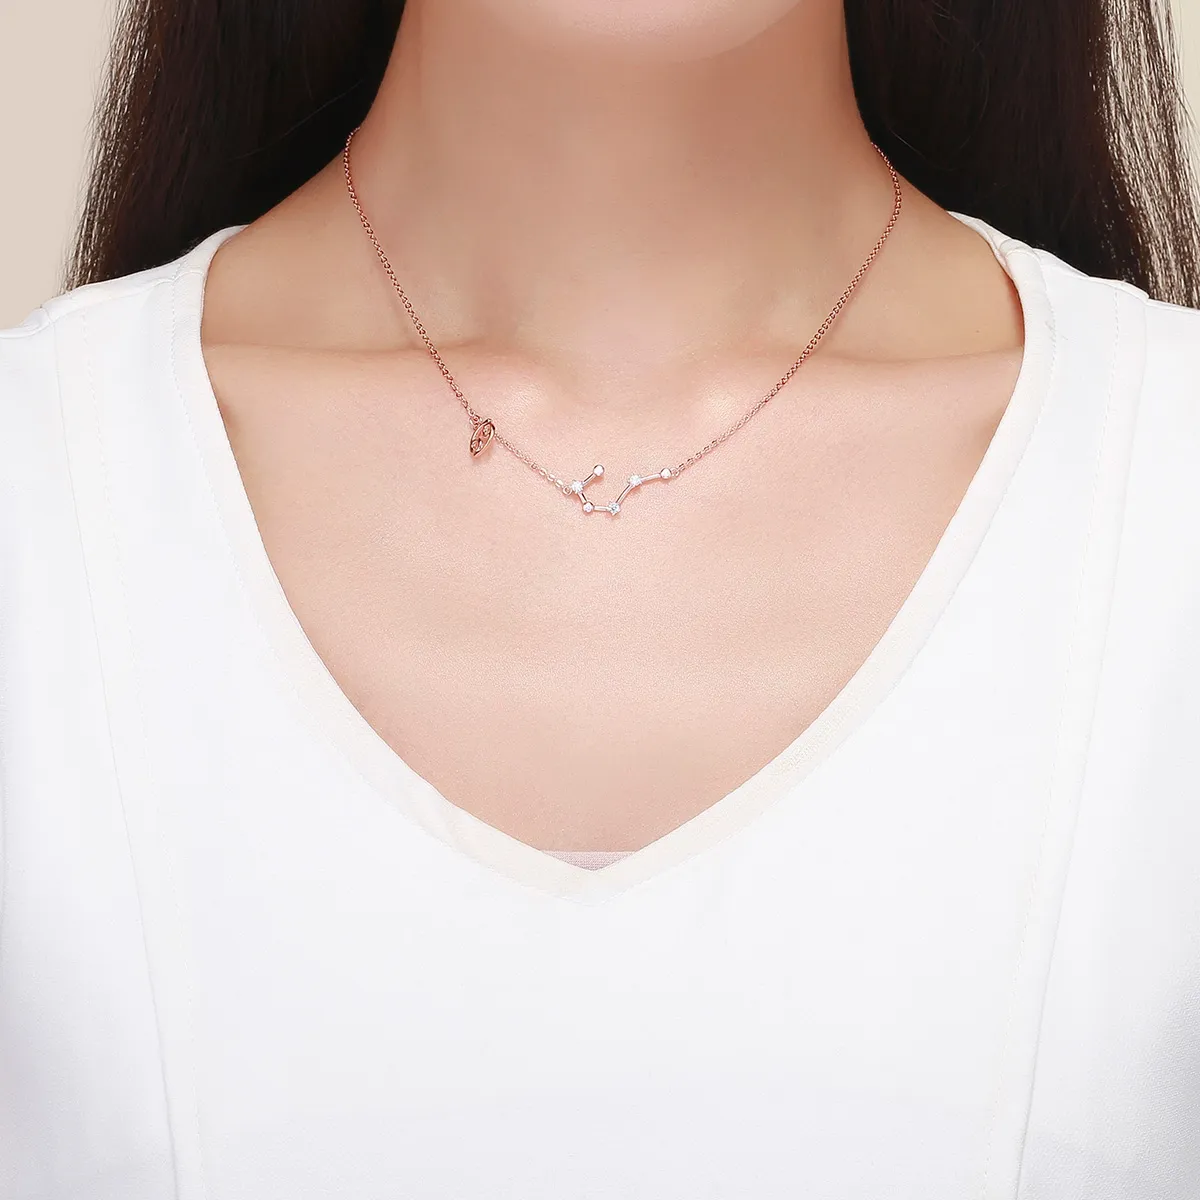 Pandora Style Cancer Necklace - BSN018